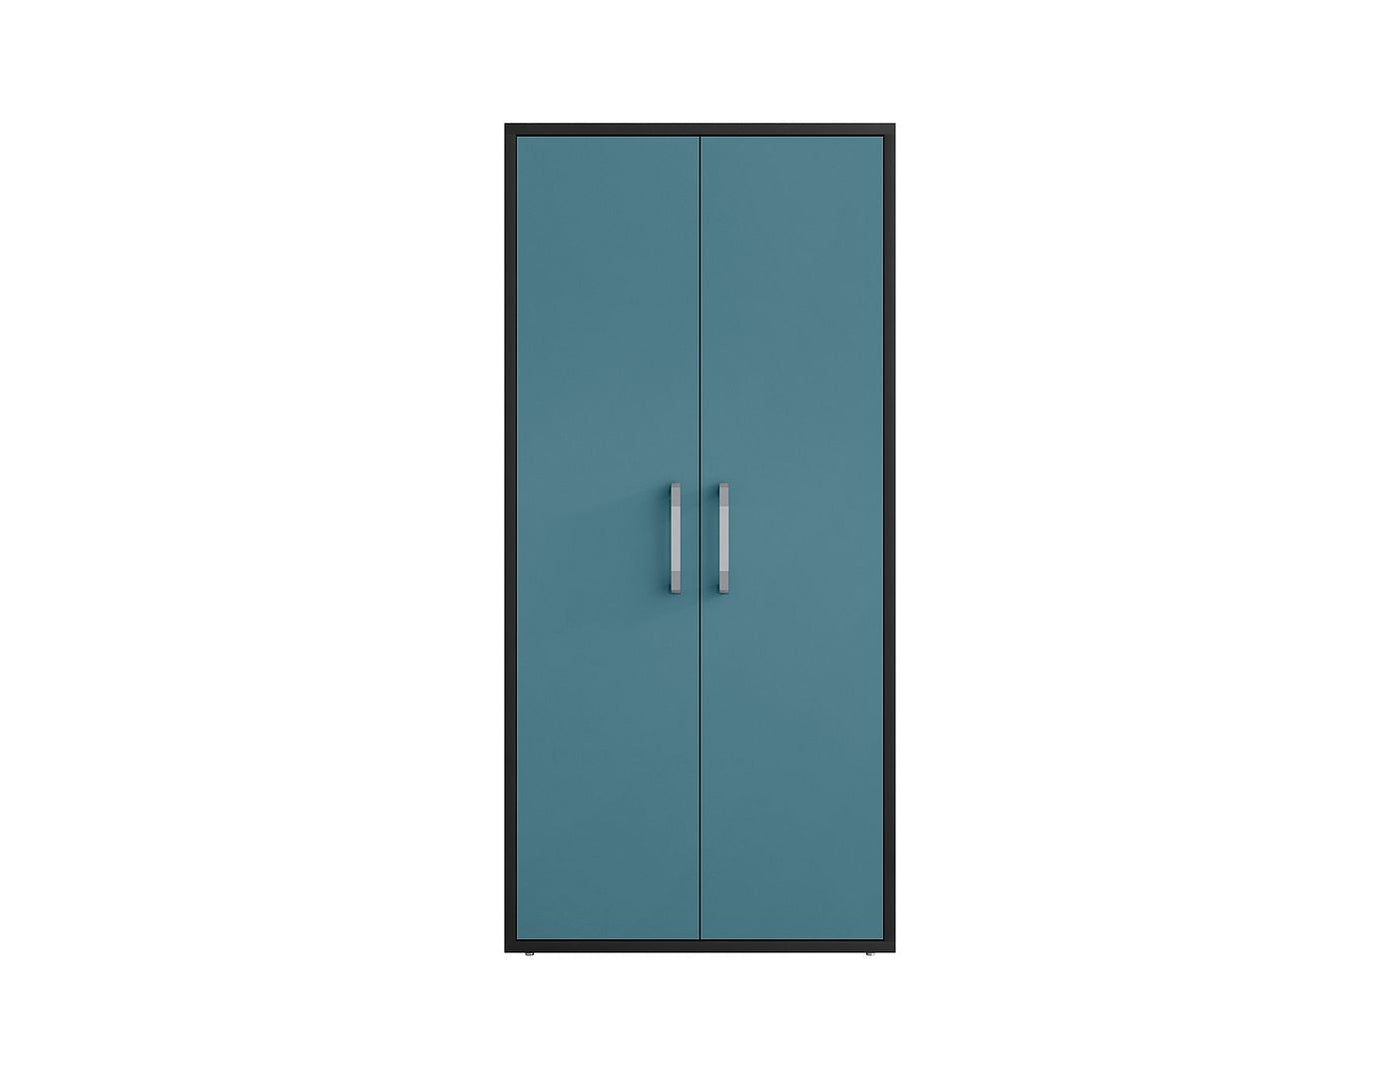 Lunde Tall Garage Cabinet - Blue Gloss